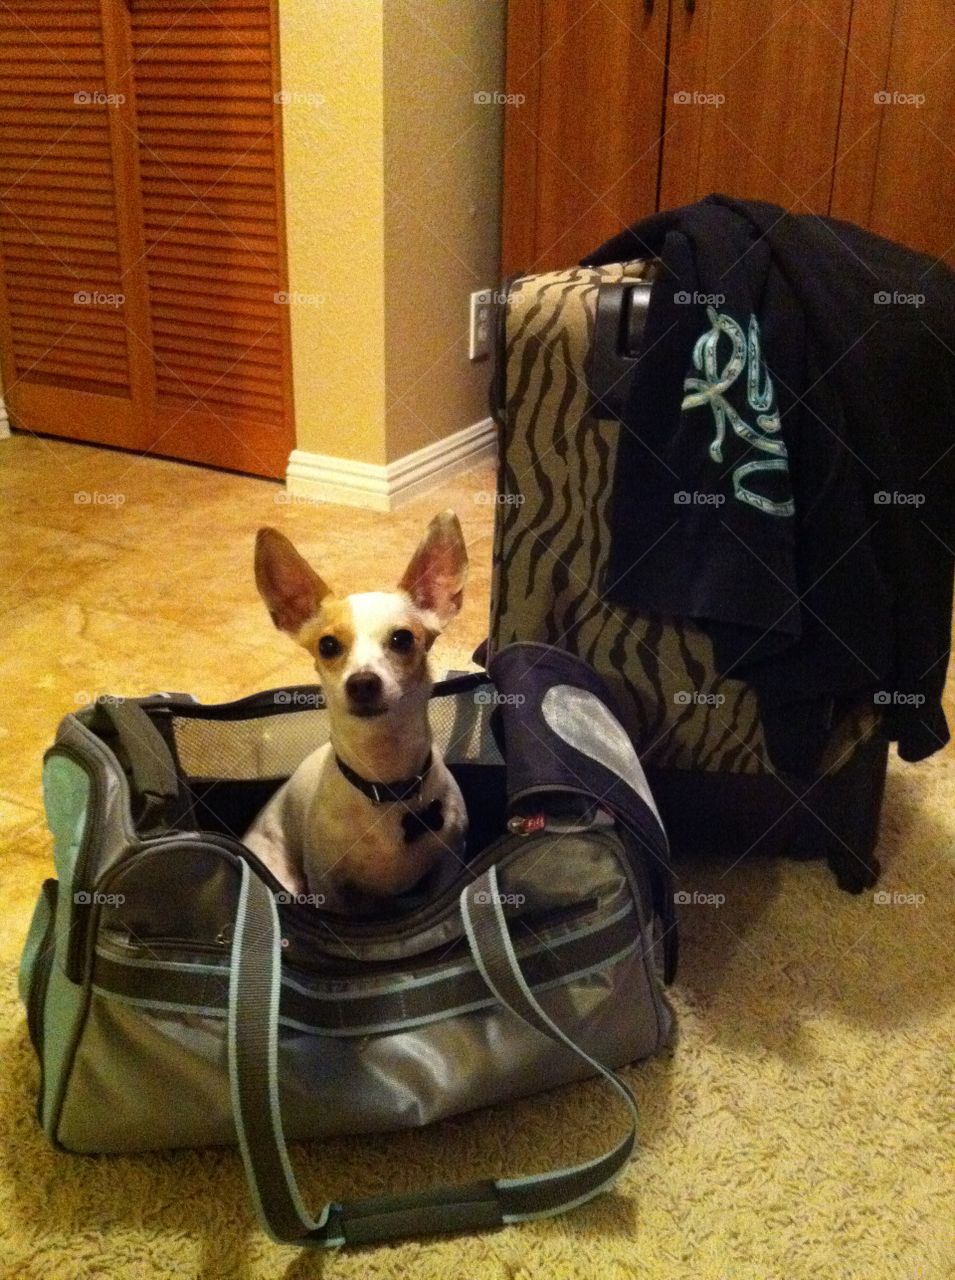 Doggie bag to-go!